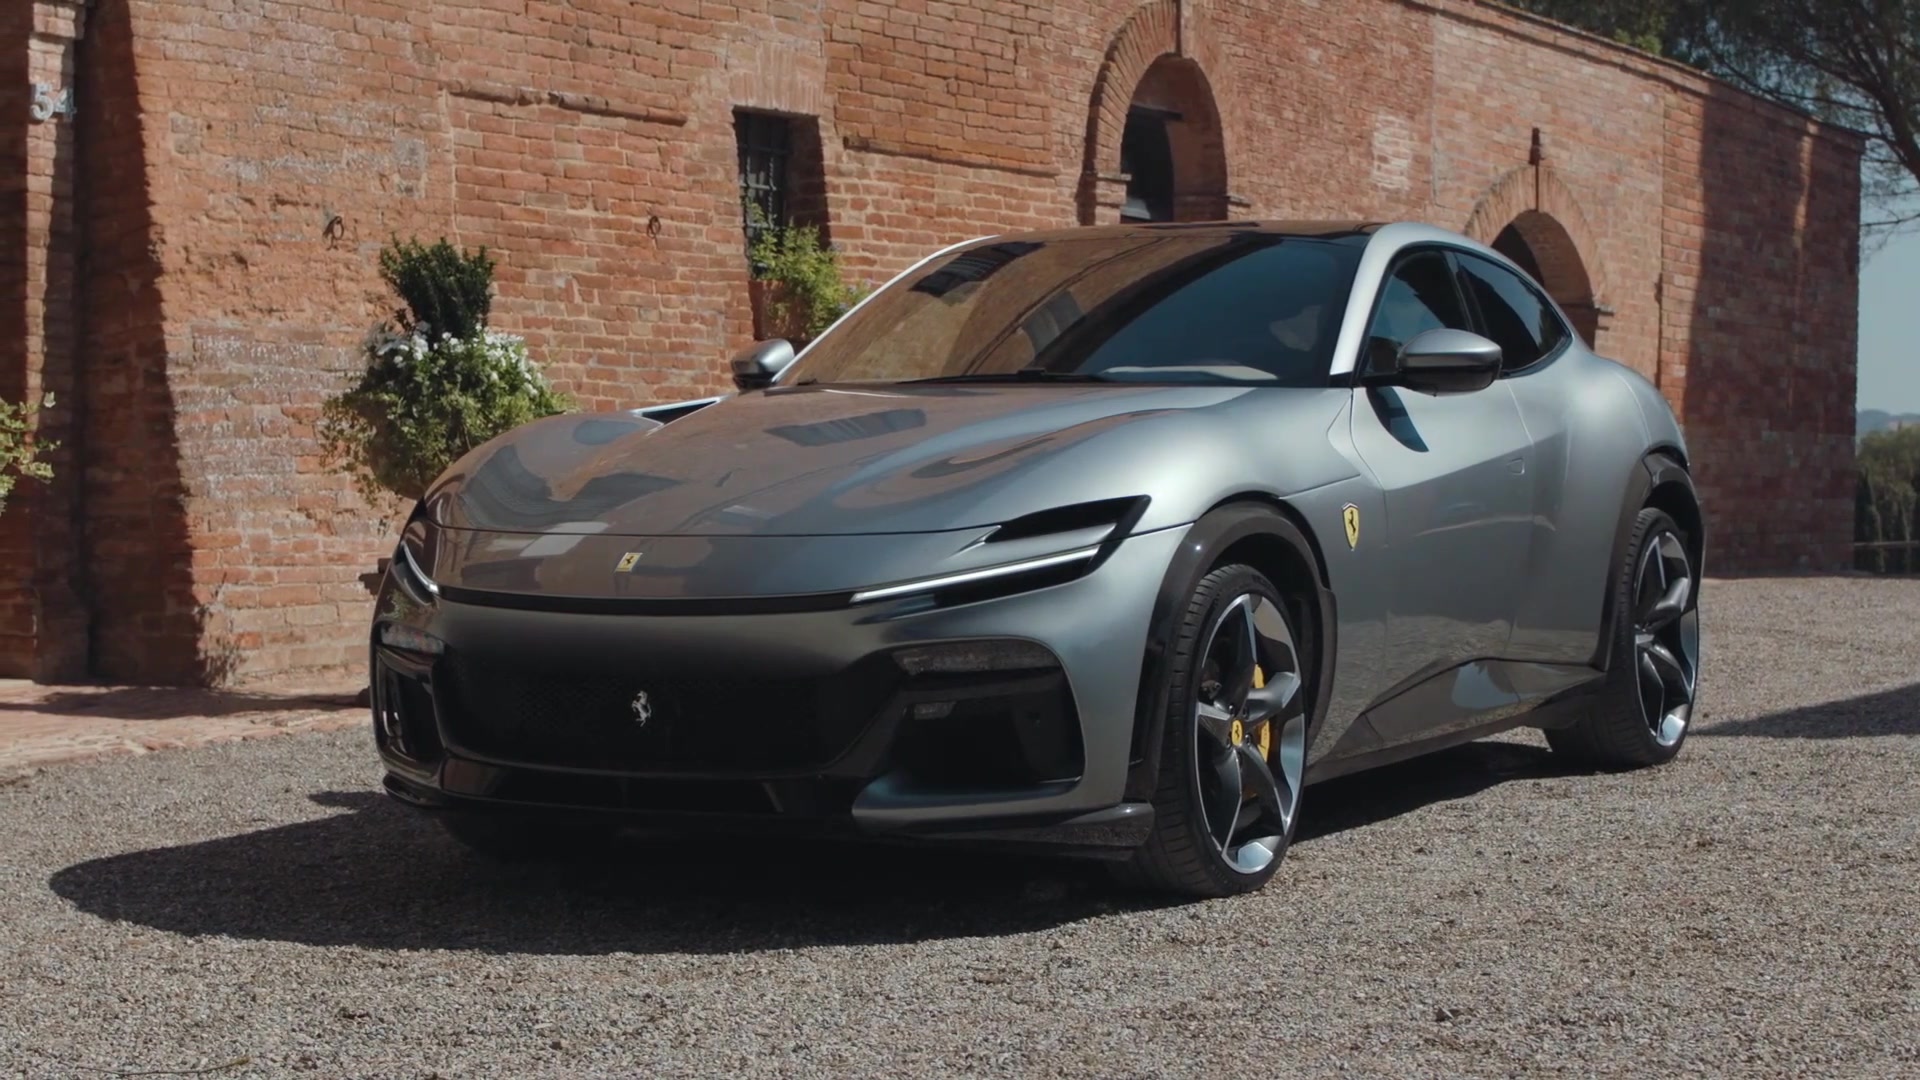 The all-new Ferrari Purosangue - Unlike any other